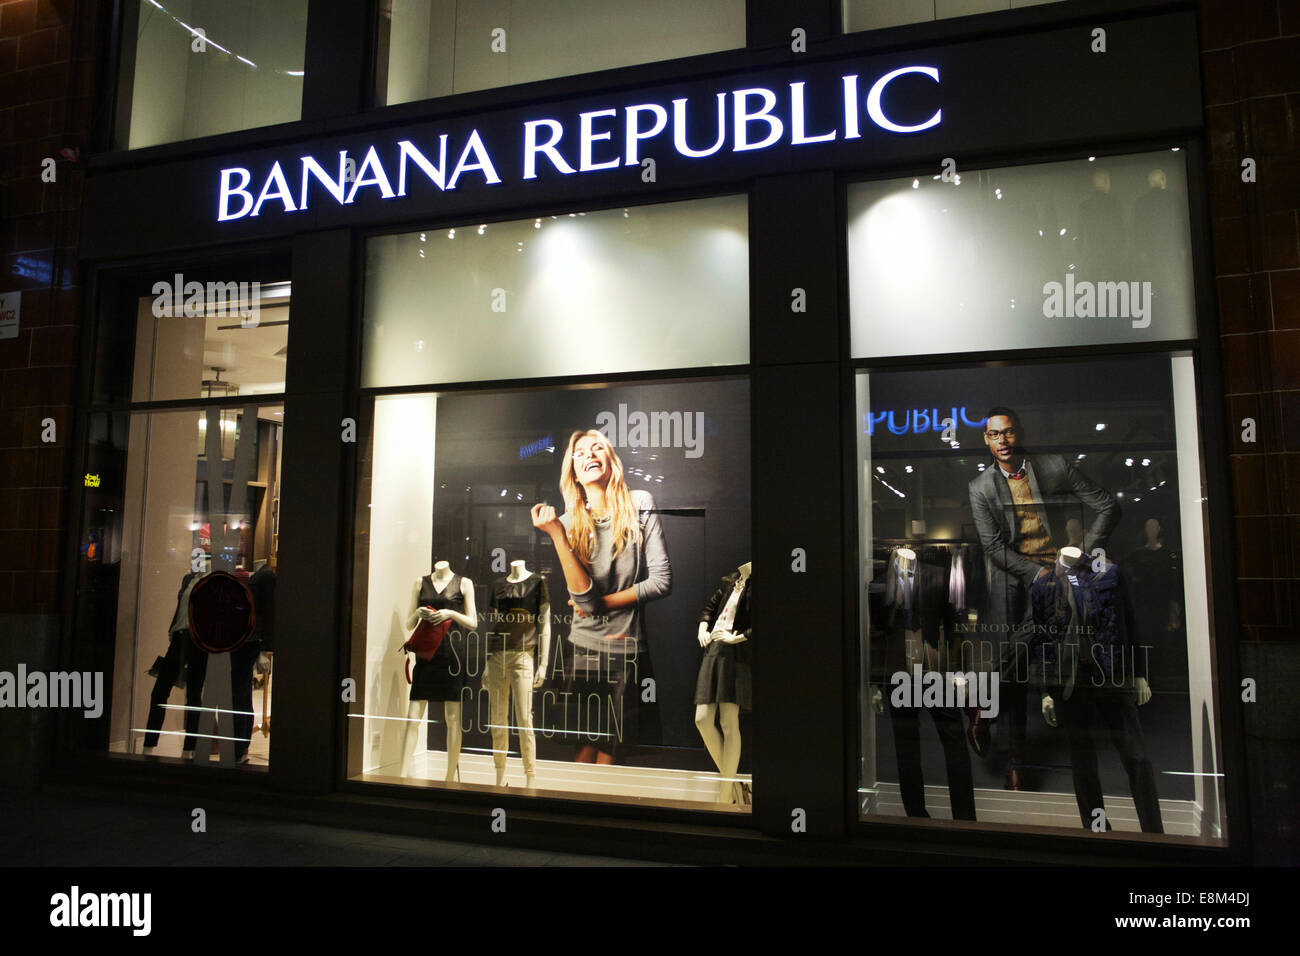 Banana republic london hi-res stock photography and images - Alamy